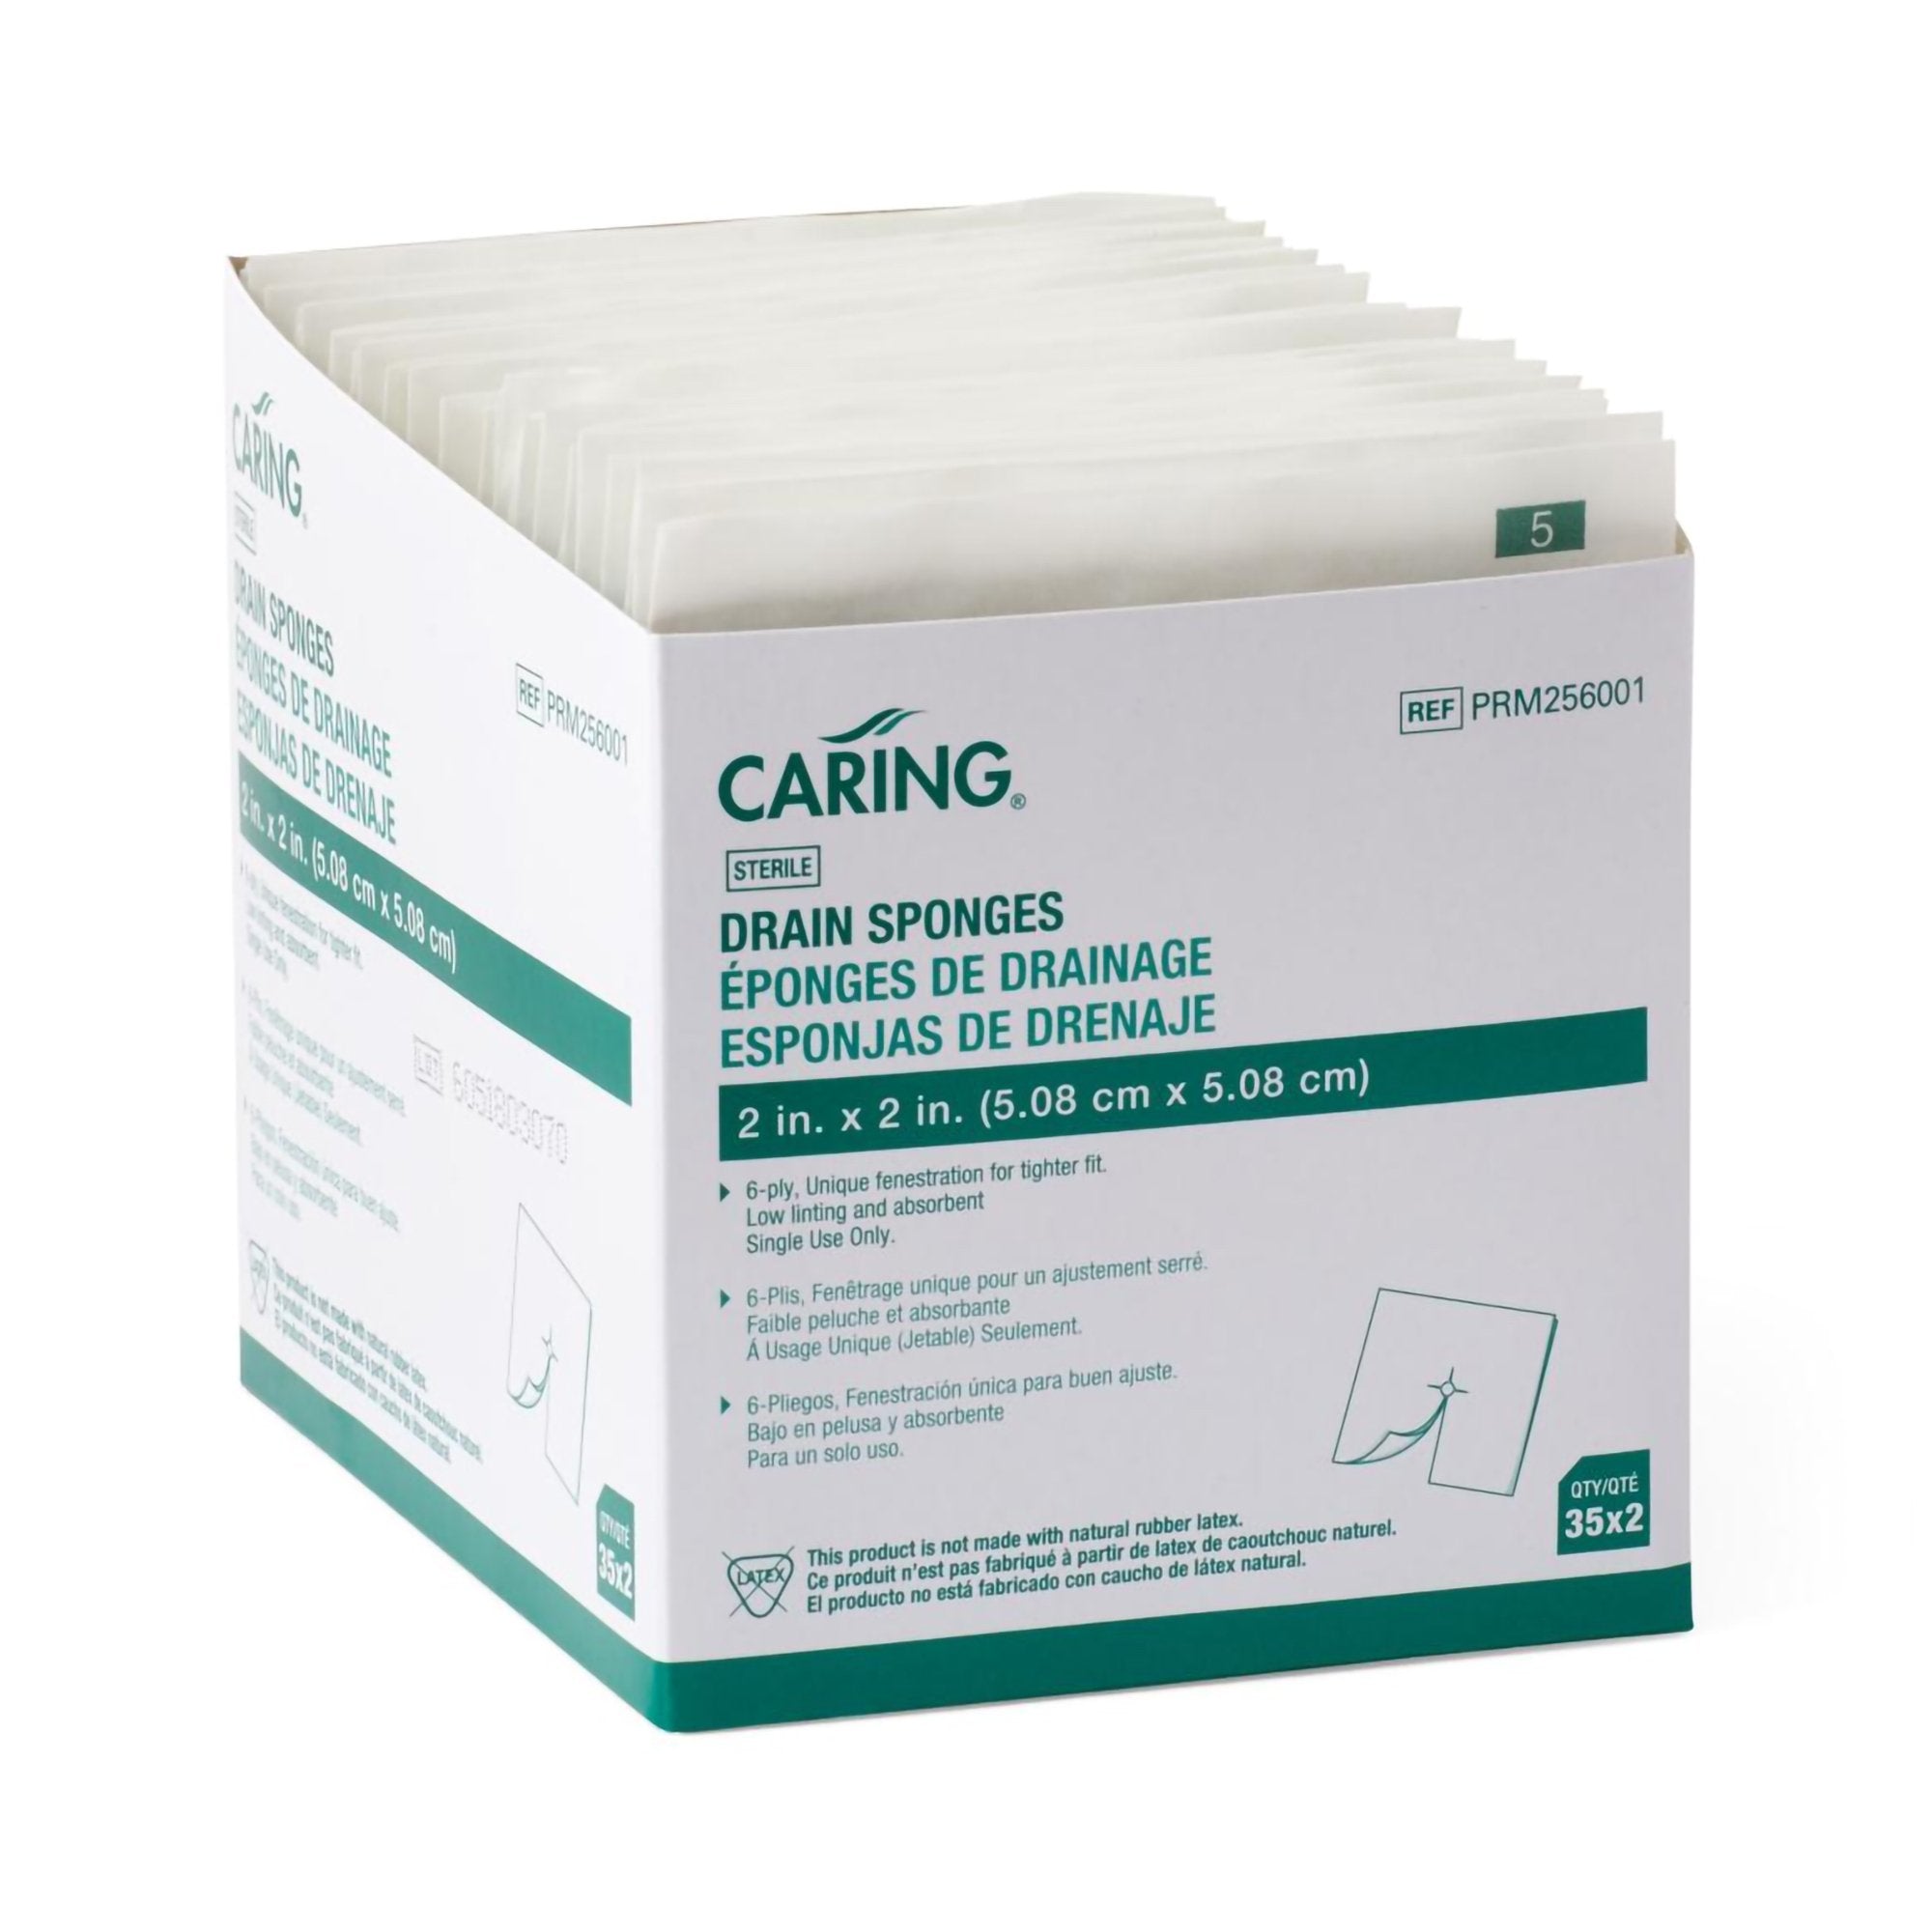 Drain Sponge Caring® 2 X 2 Inch Sterile 6-Ply